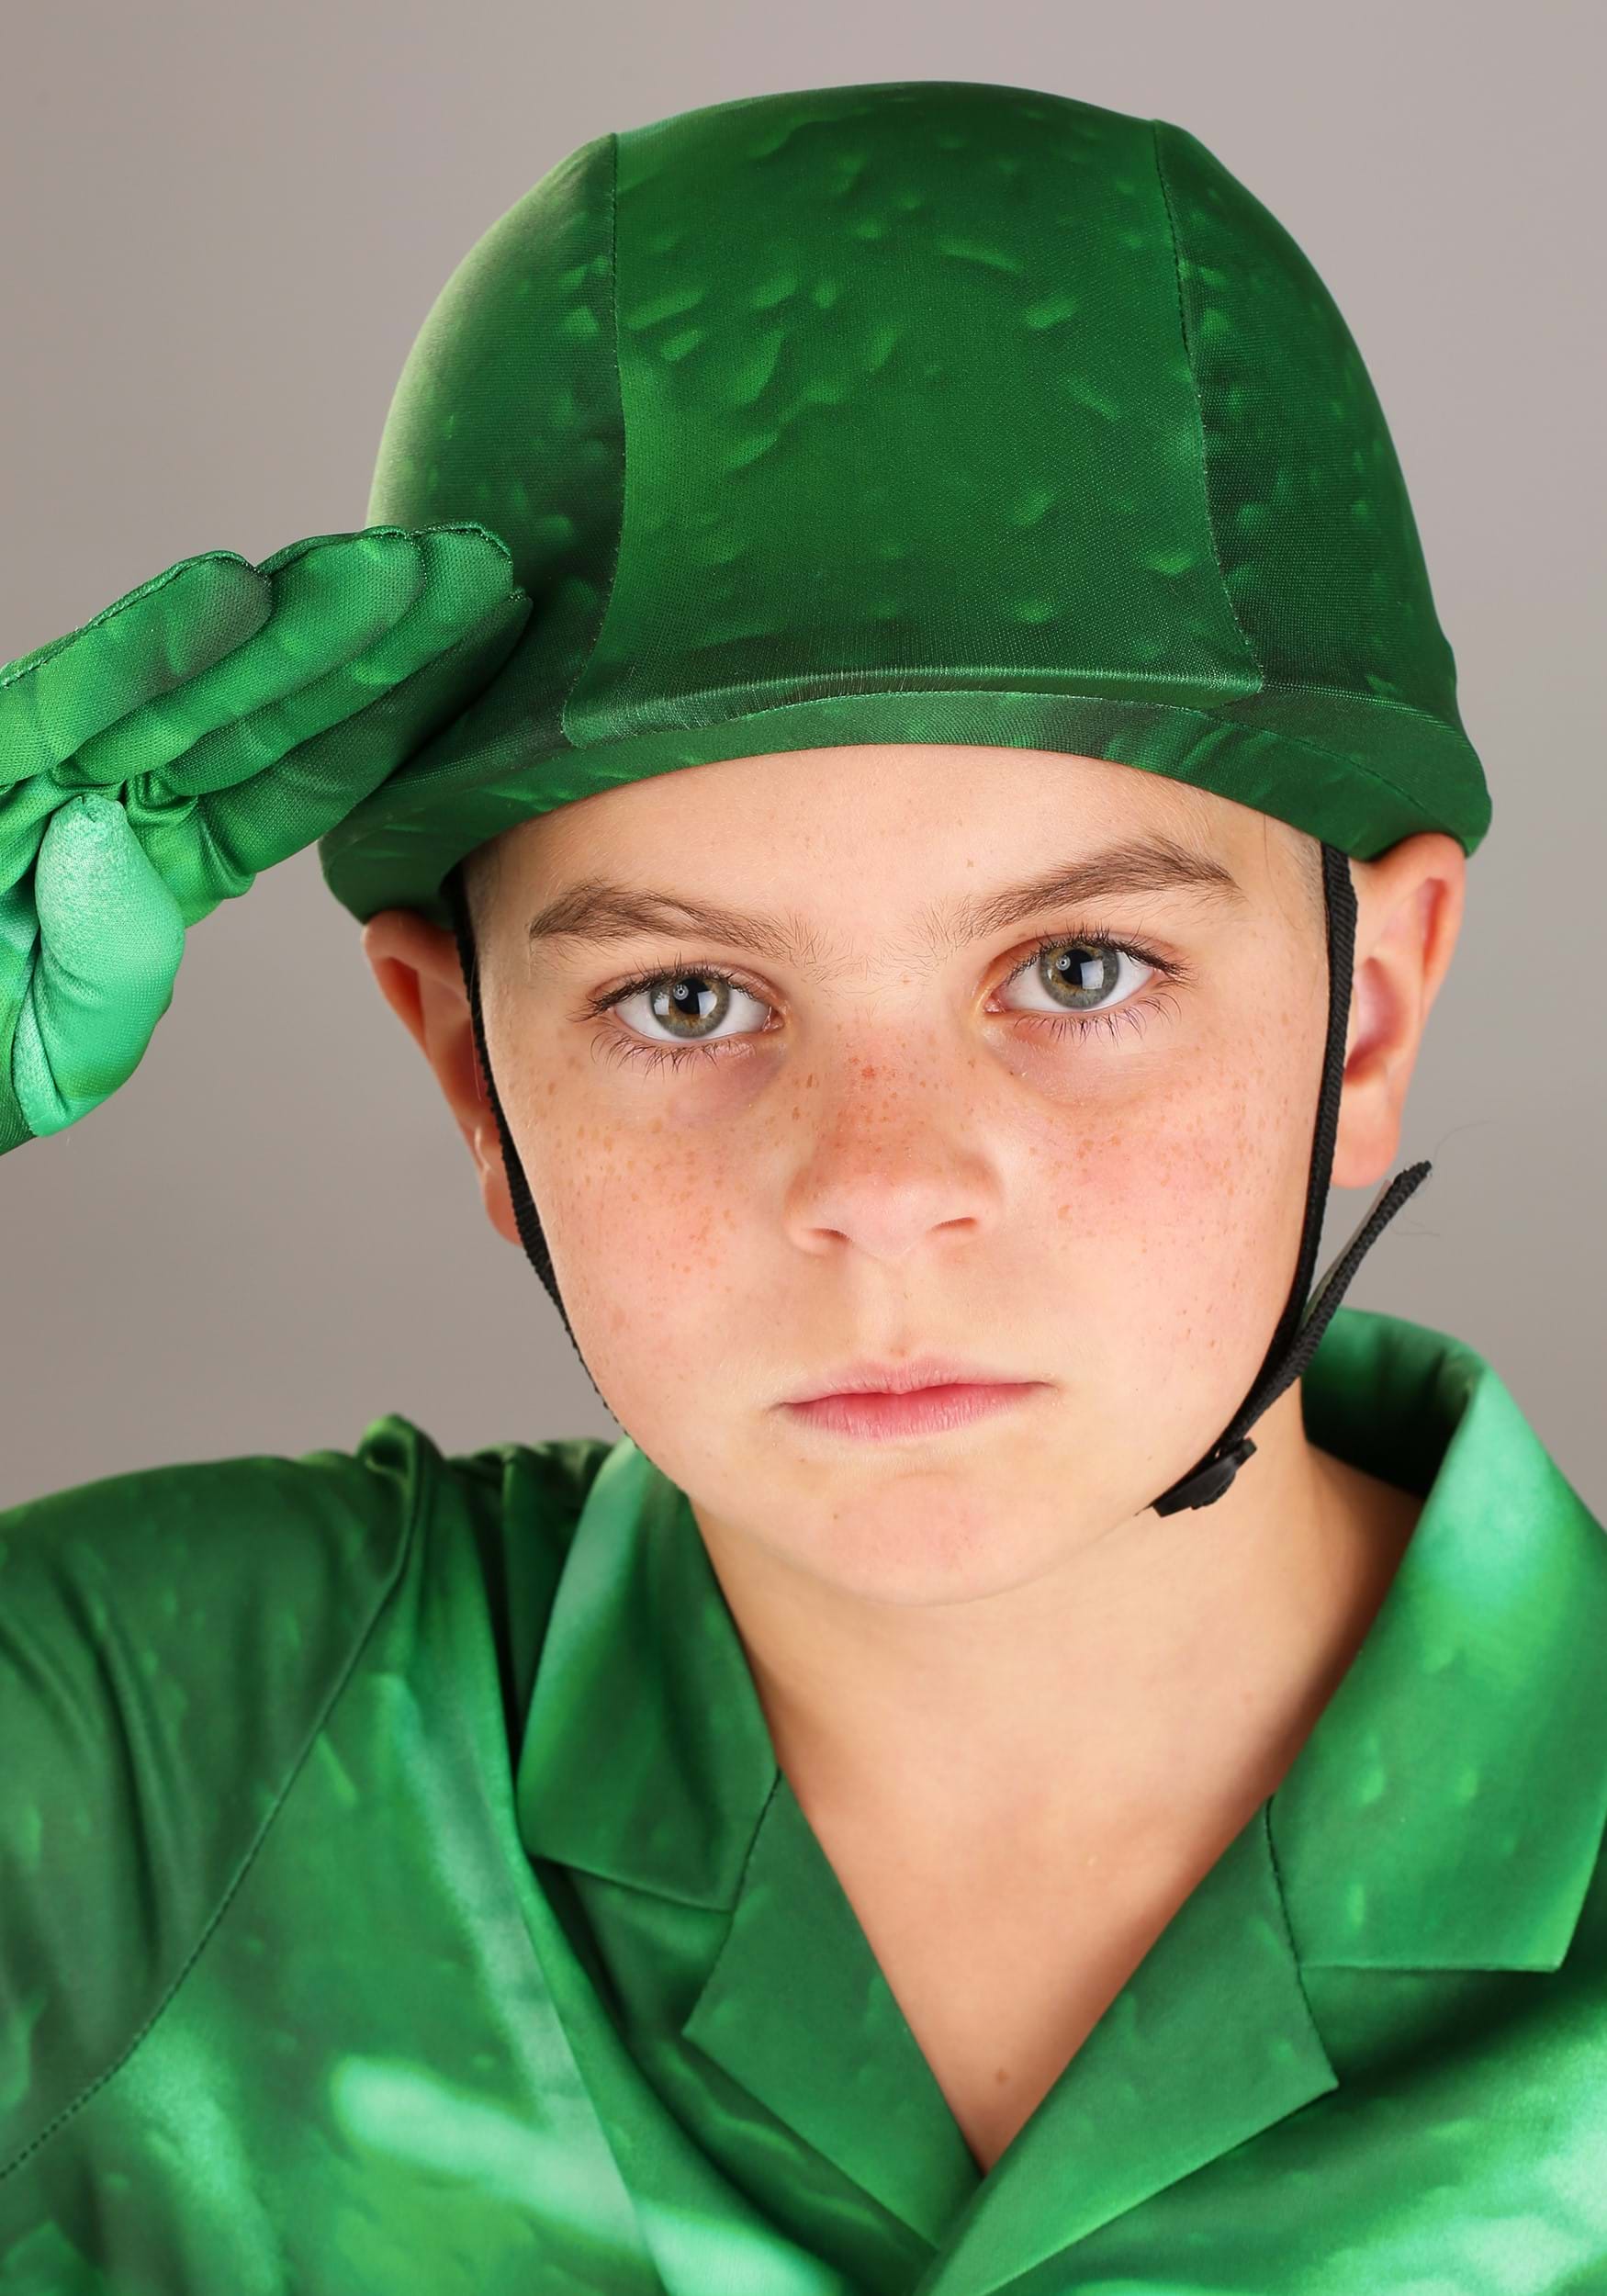 Plastic Army Man Kid's Costume